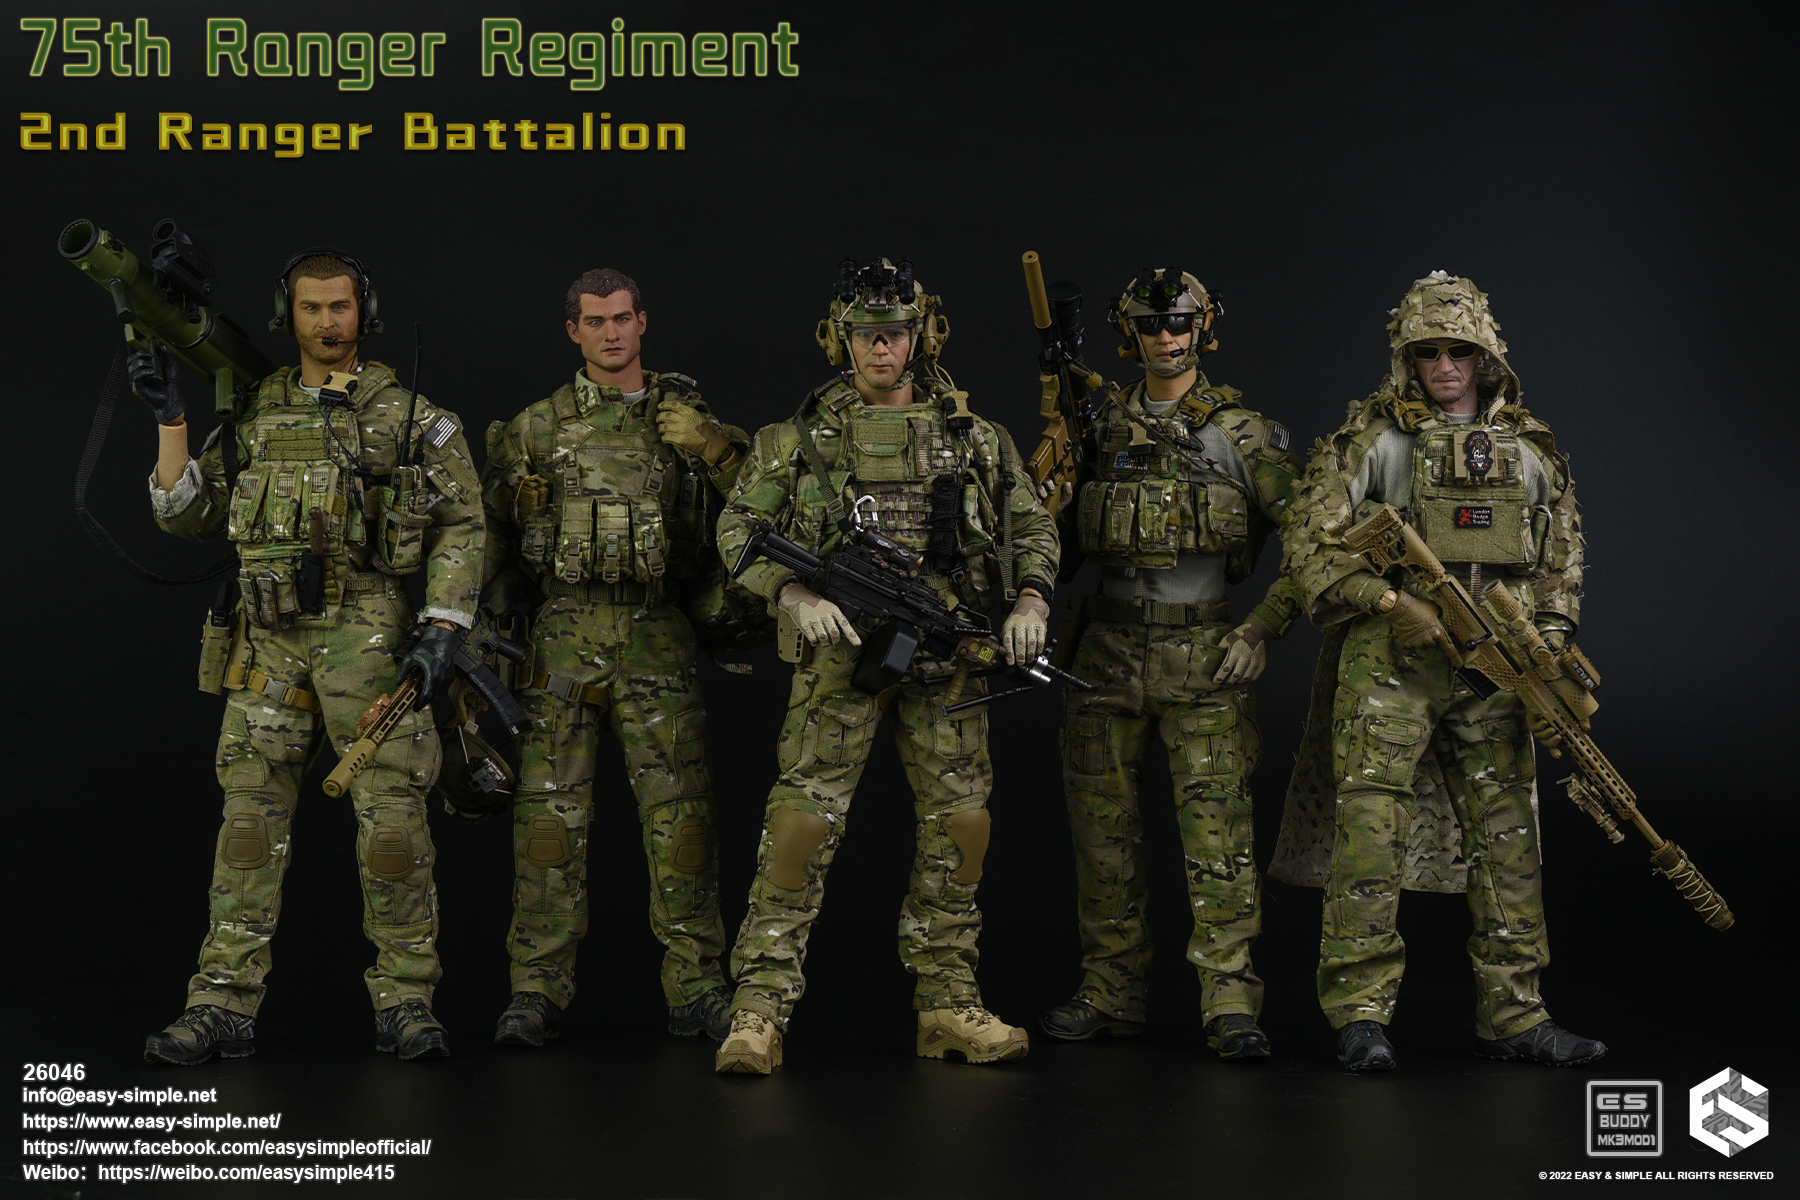 Display---Easy&Simple 26046 75th Ranger Regiment 2nd Ranger Battalion